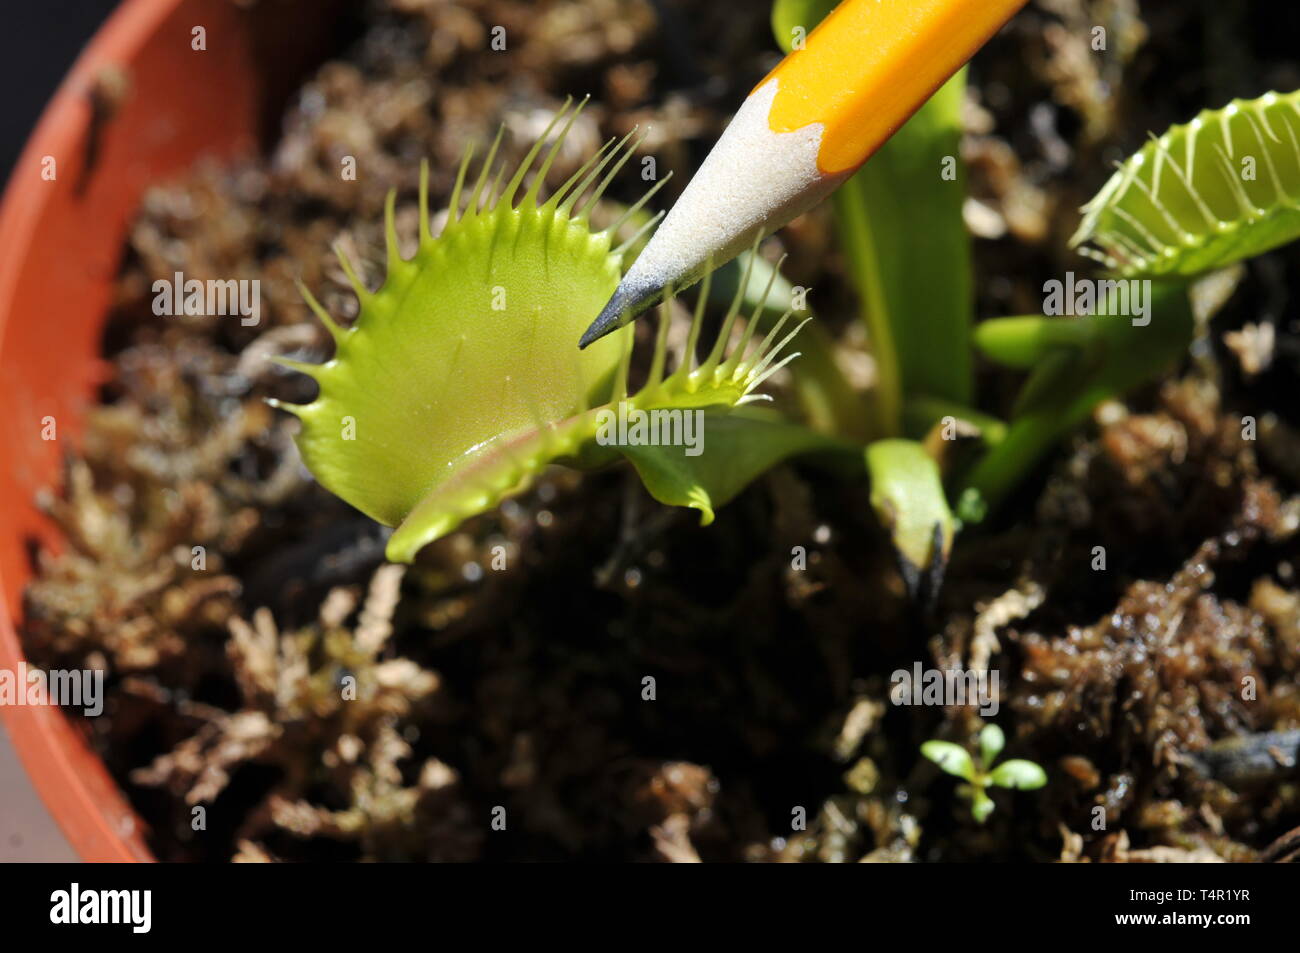 Venus flytrap snatching pencil Stock Photo